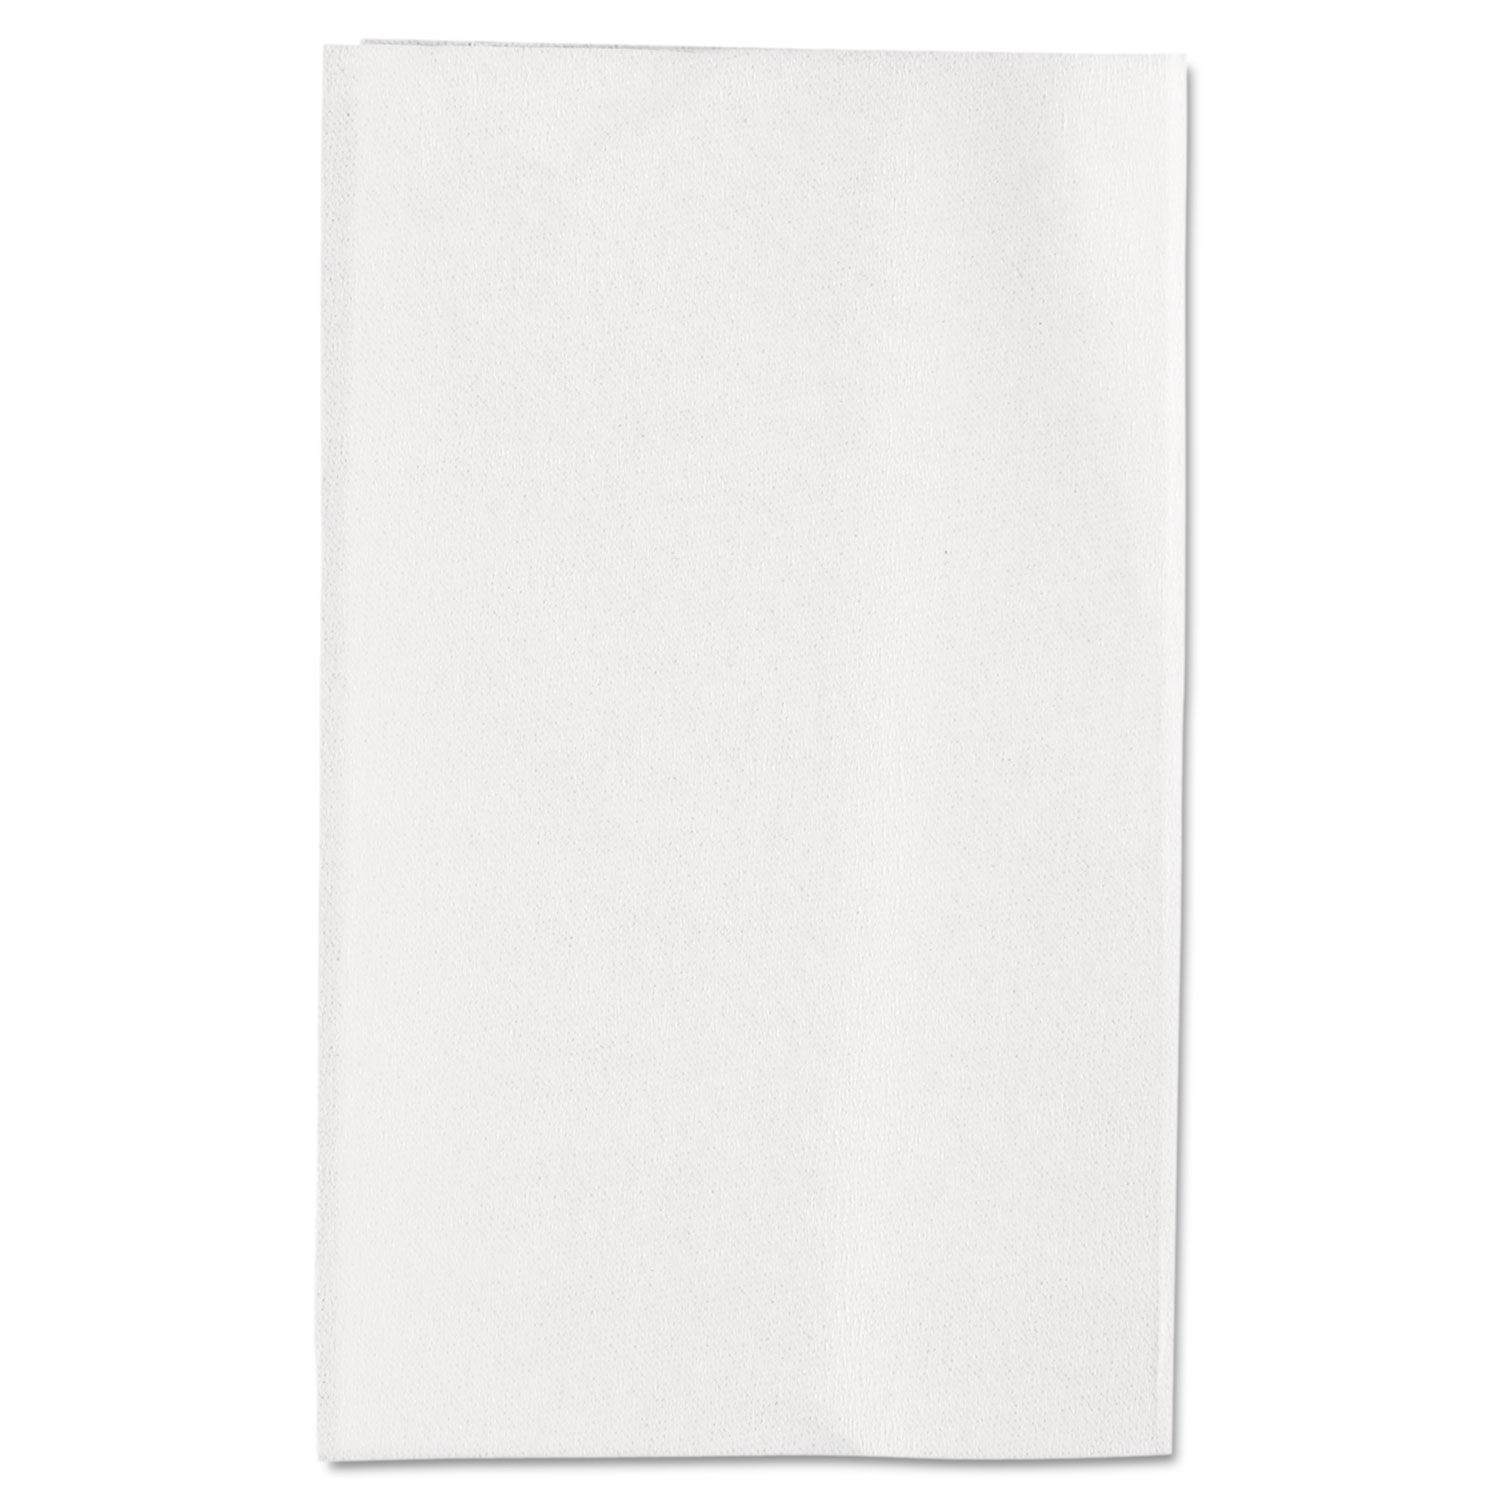 Singlefold Interfolded Bathroom Tissue Septic Safe, 1-Ply, White, 400 Sheets/Pack, 60 Packs/Carton